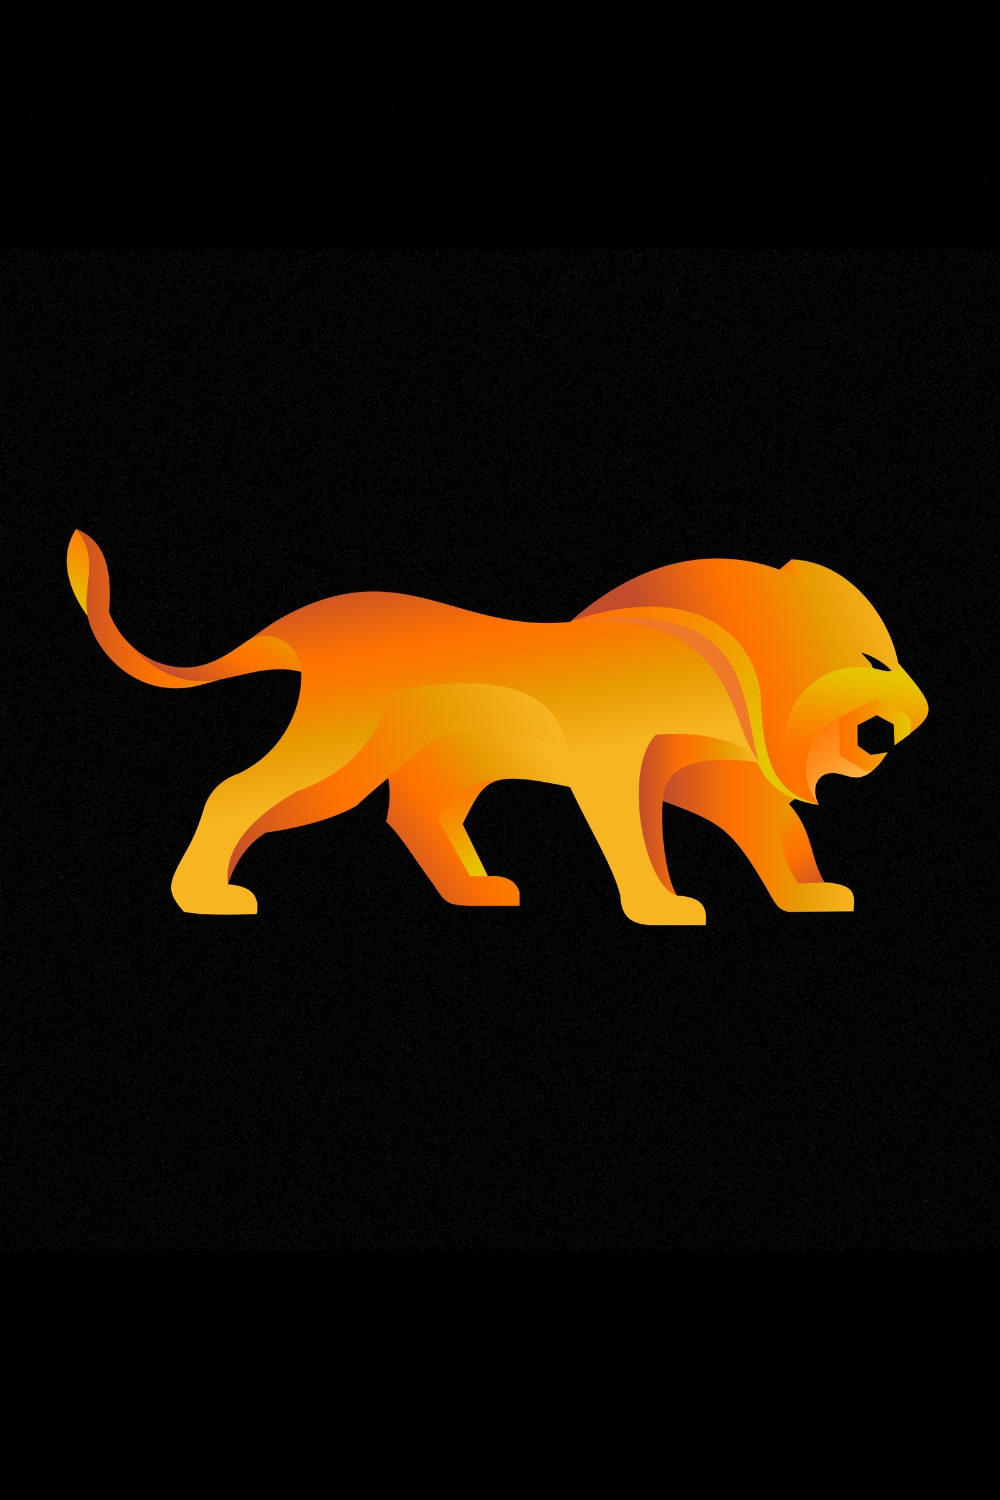 Abstract lion 3D Logo Design Logo Vector illustration Artwork pinterest preview image.